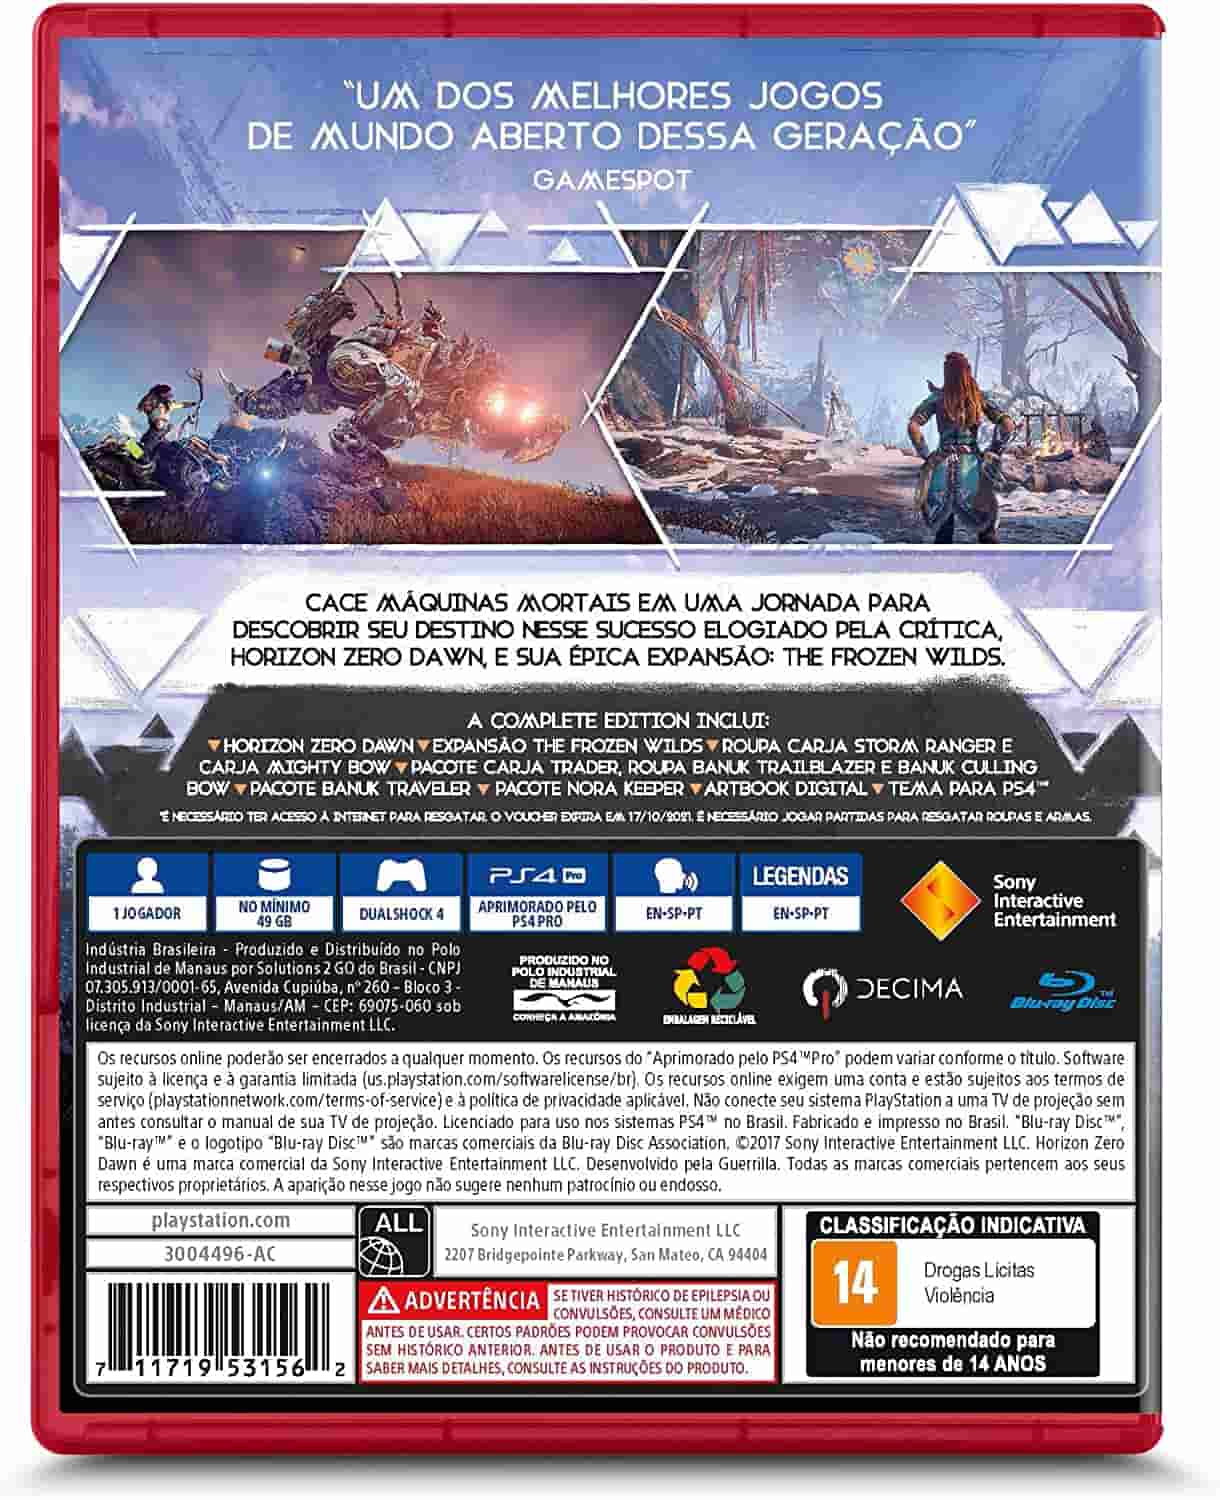 jogo-horizon-zero-dawn-complete-edition-hits-ps4 Jogo Horizon Zero Dawn  Hits - PS4: Melhor Preço